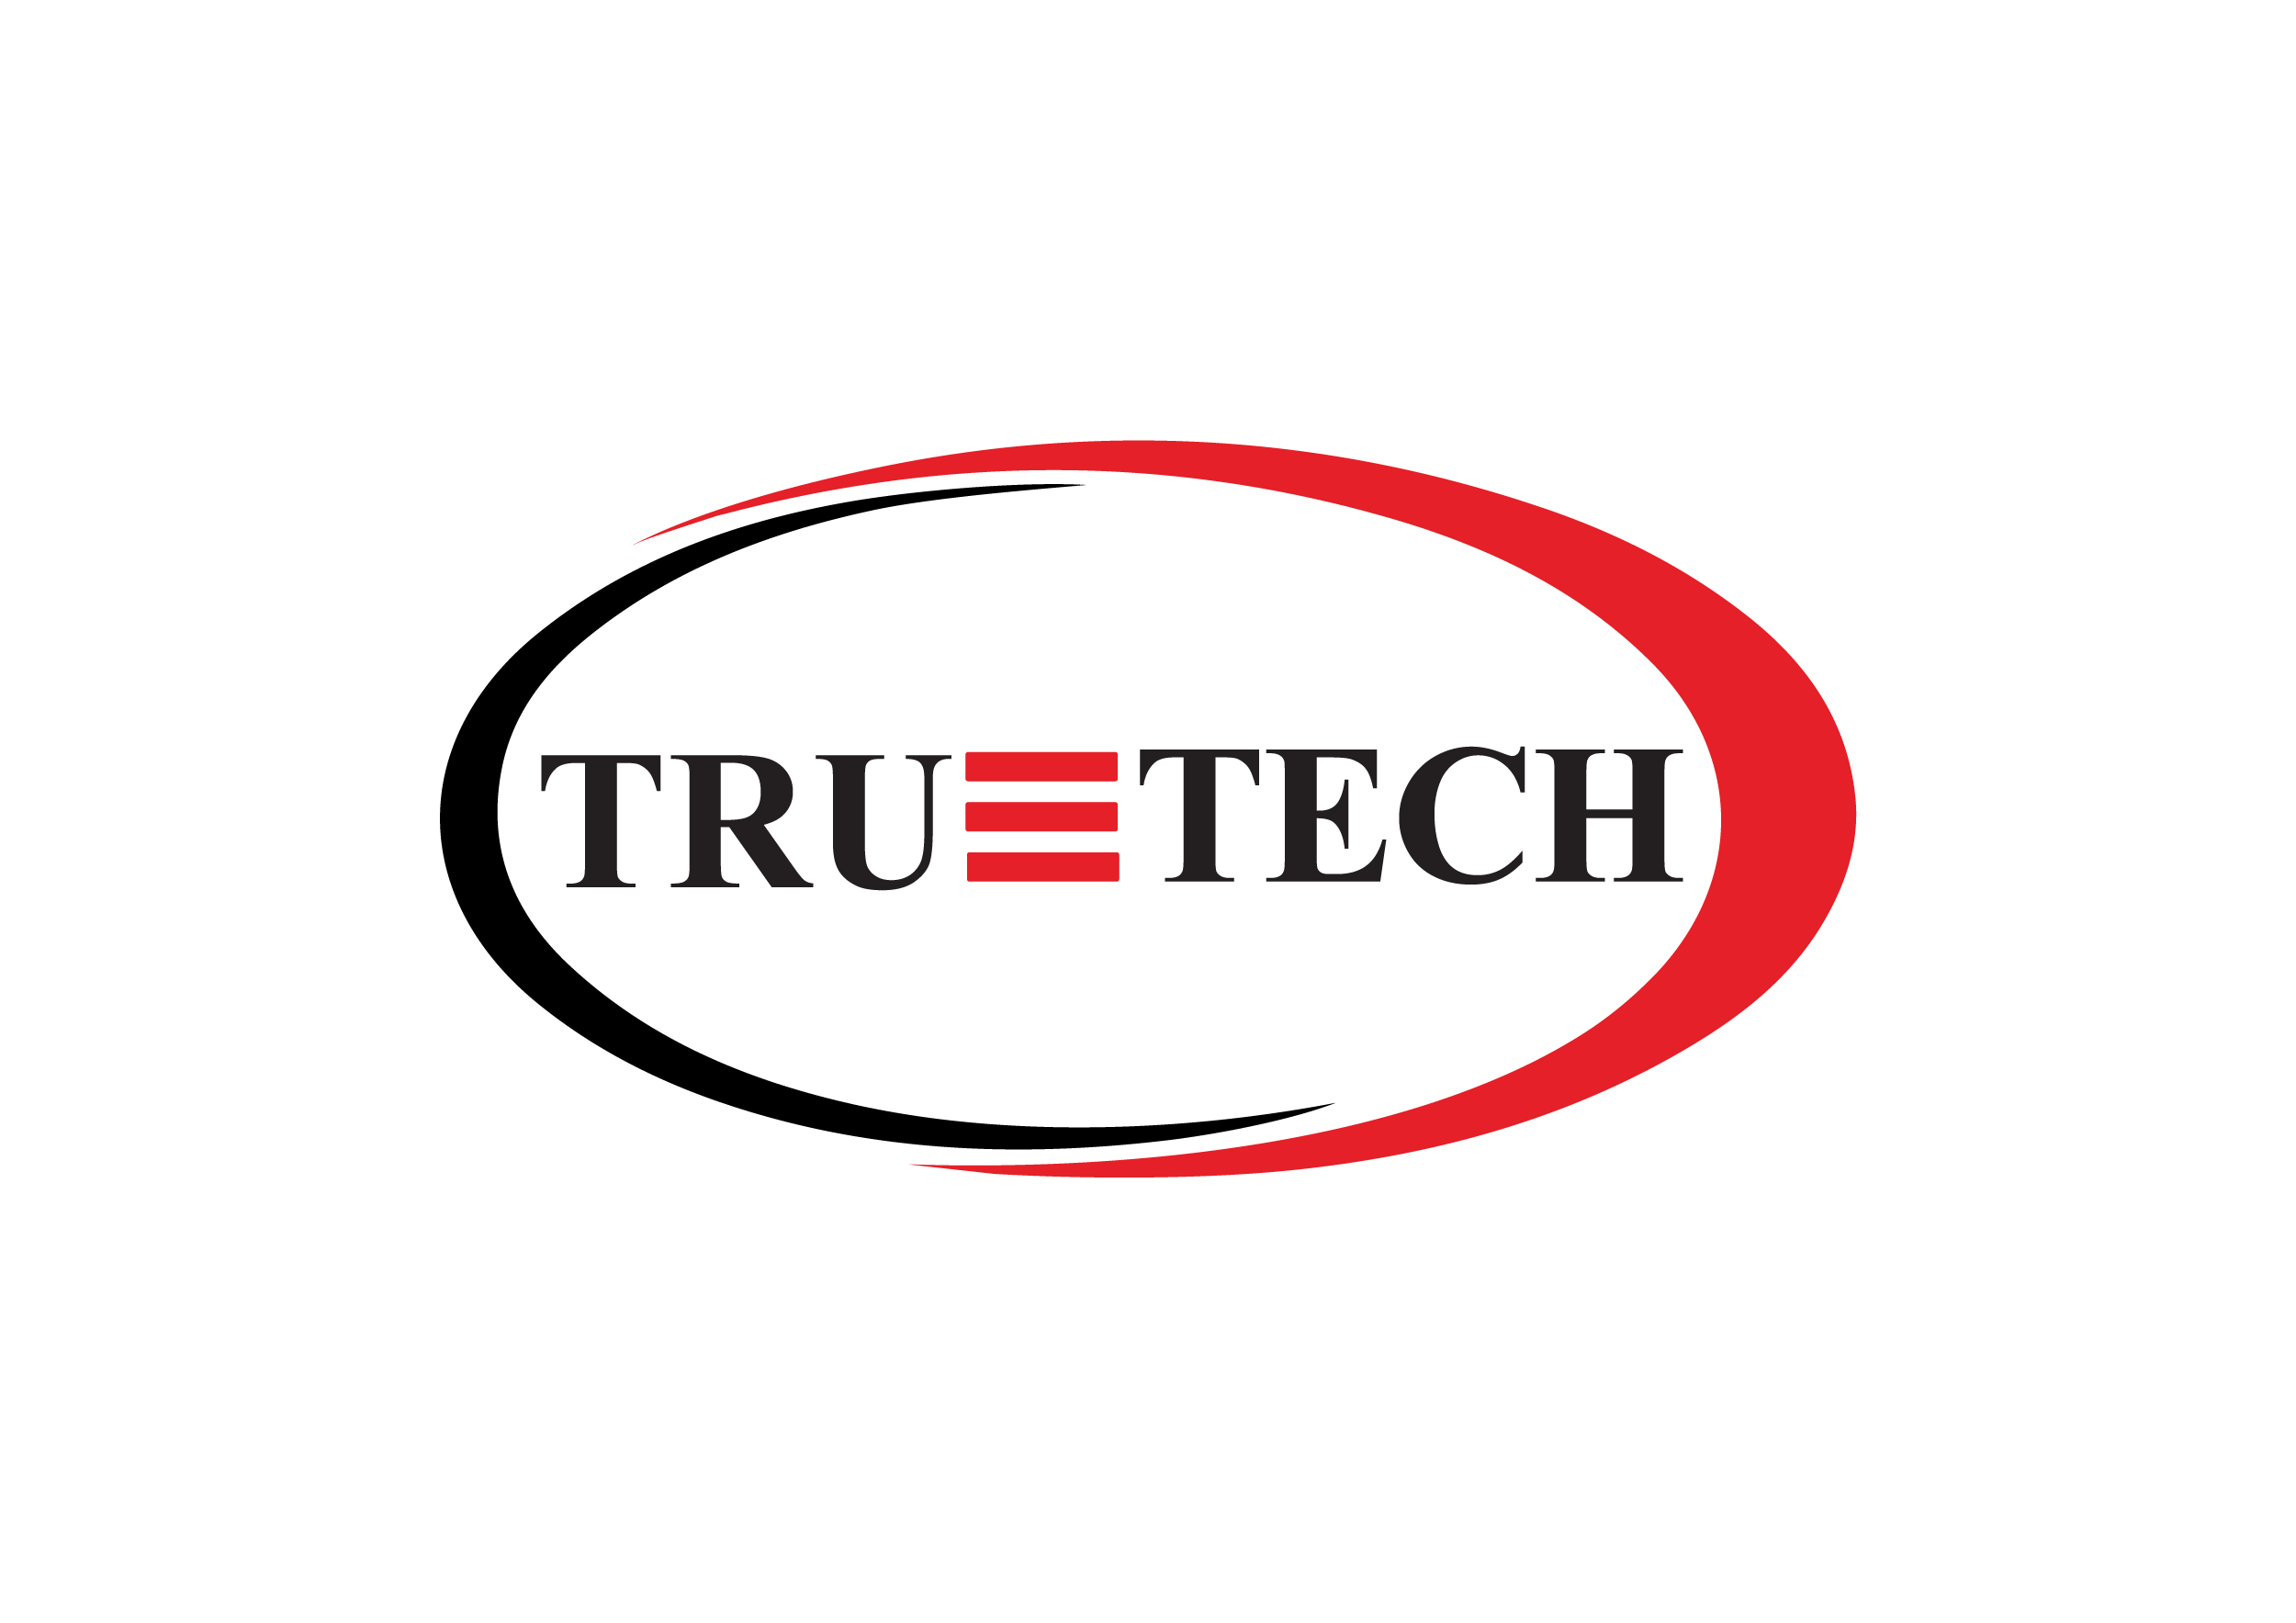 Trutech. TRUETECH. True Tech. True Technologies. True technology